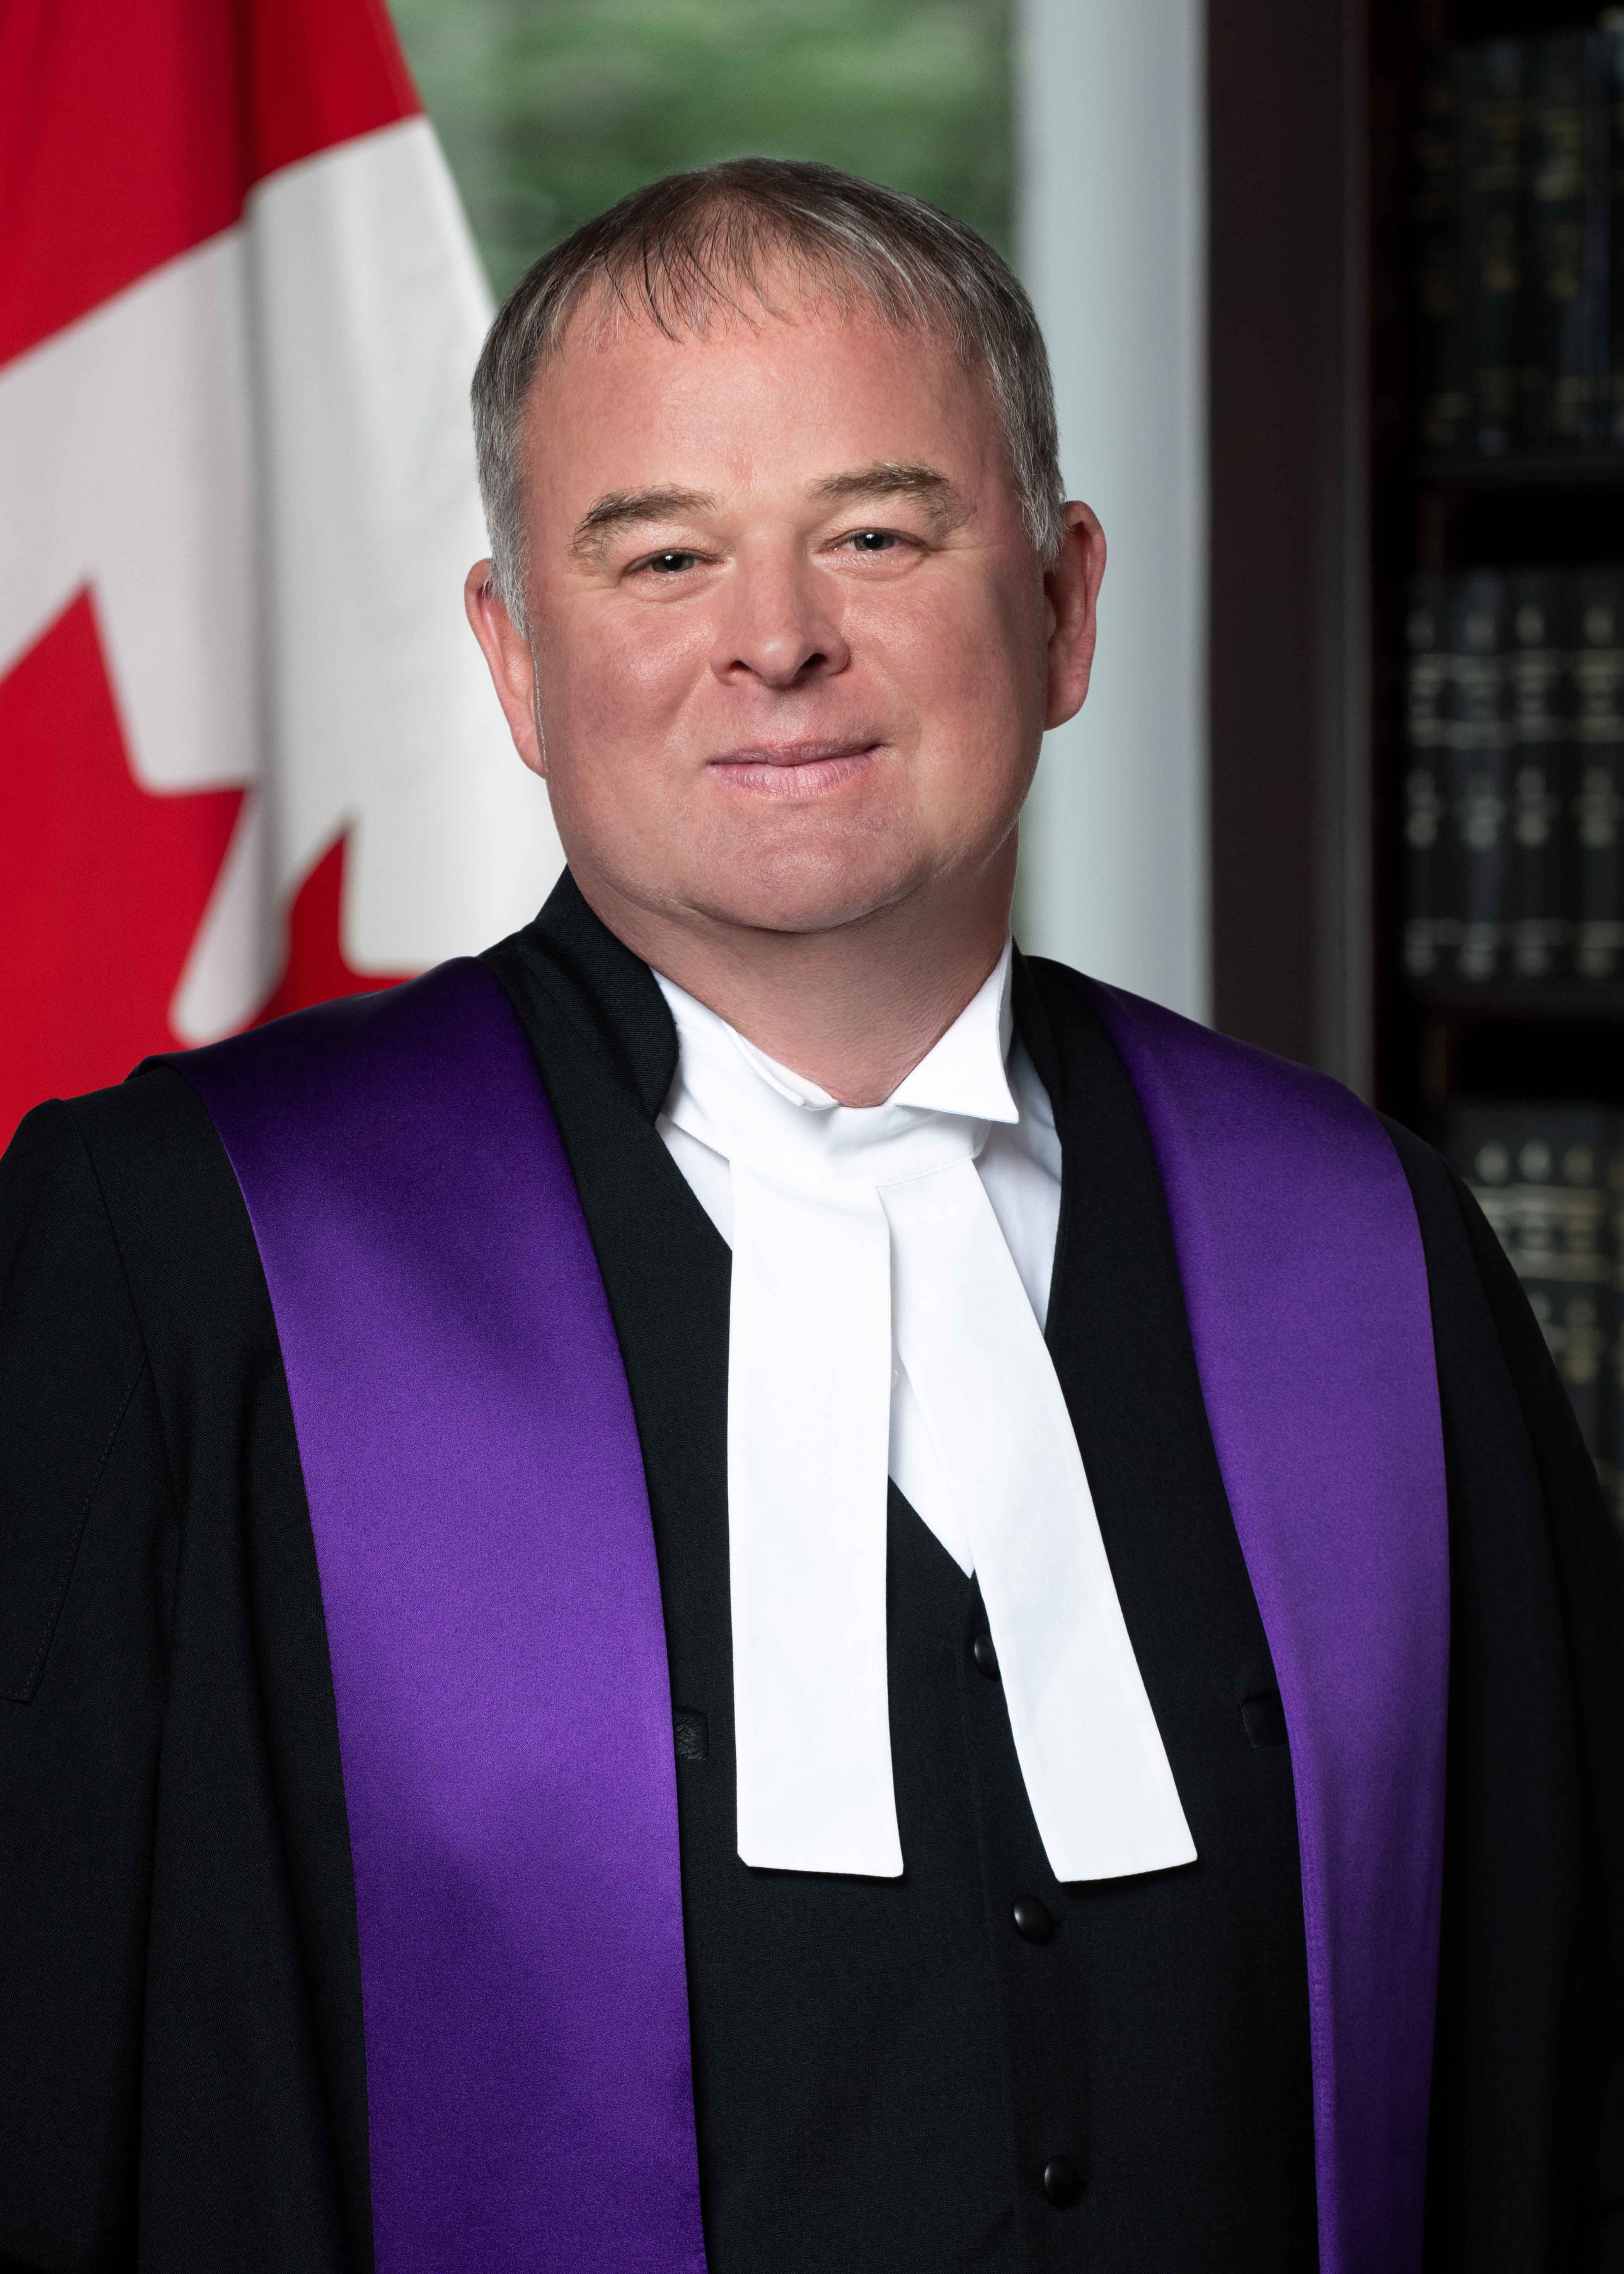 image: The Honourable Ronald MacPhee